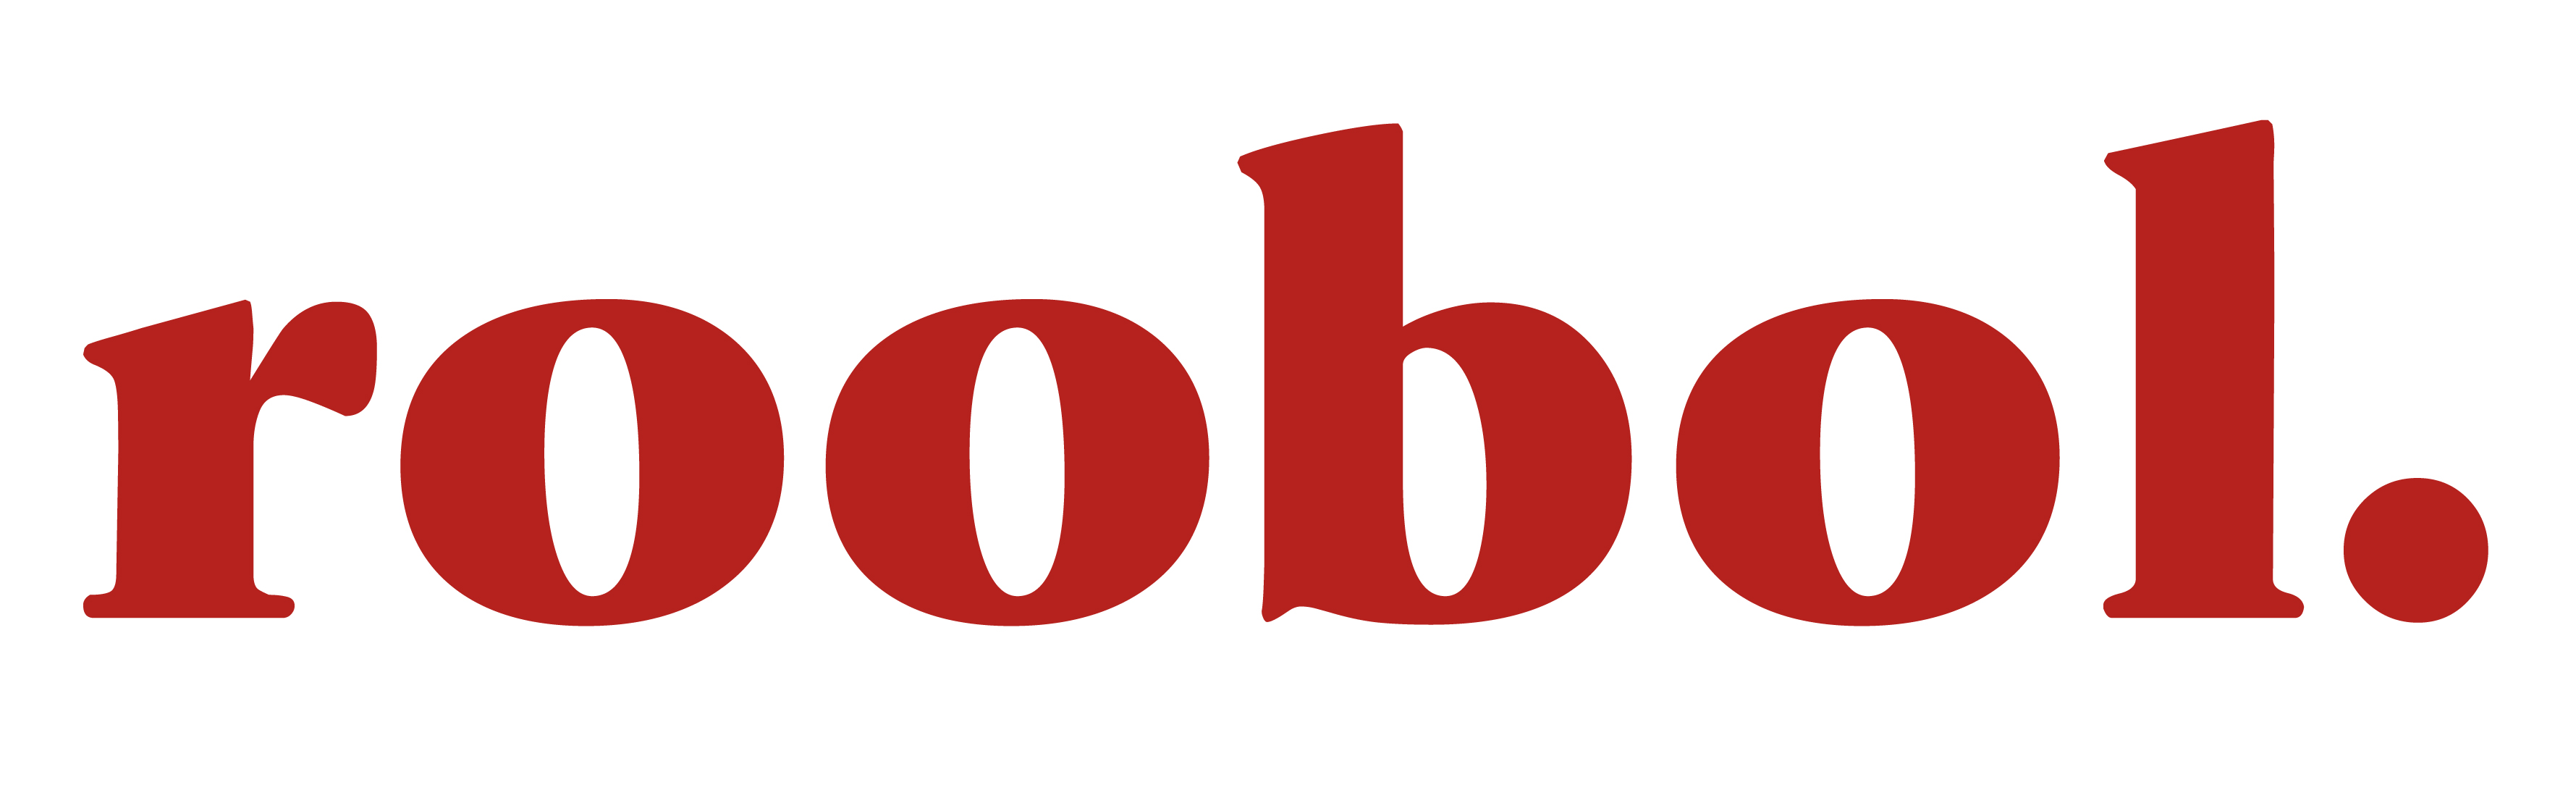 Logo Roobol Woontextiel BV